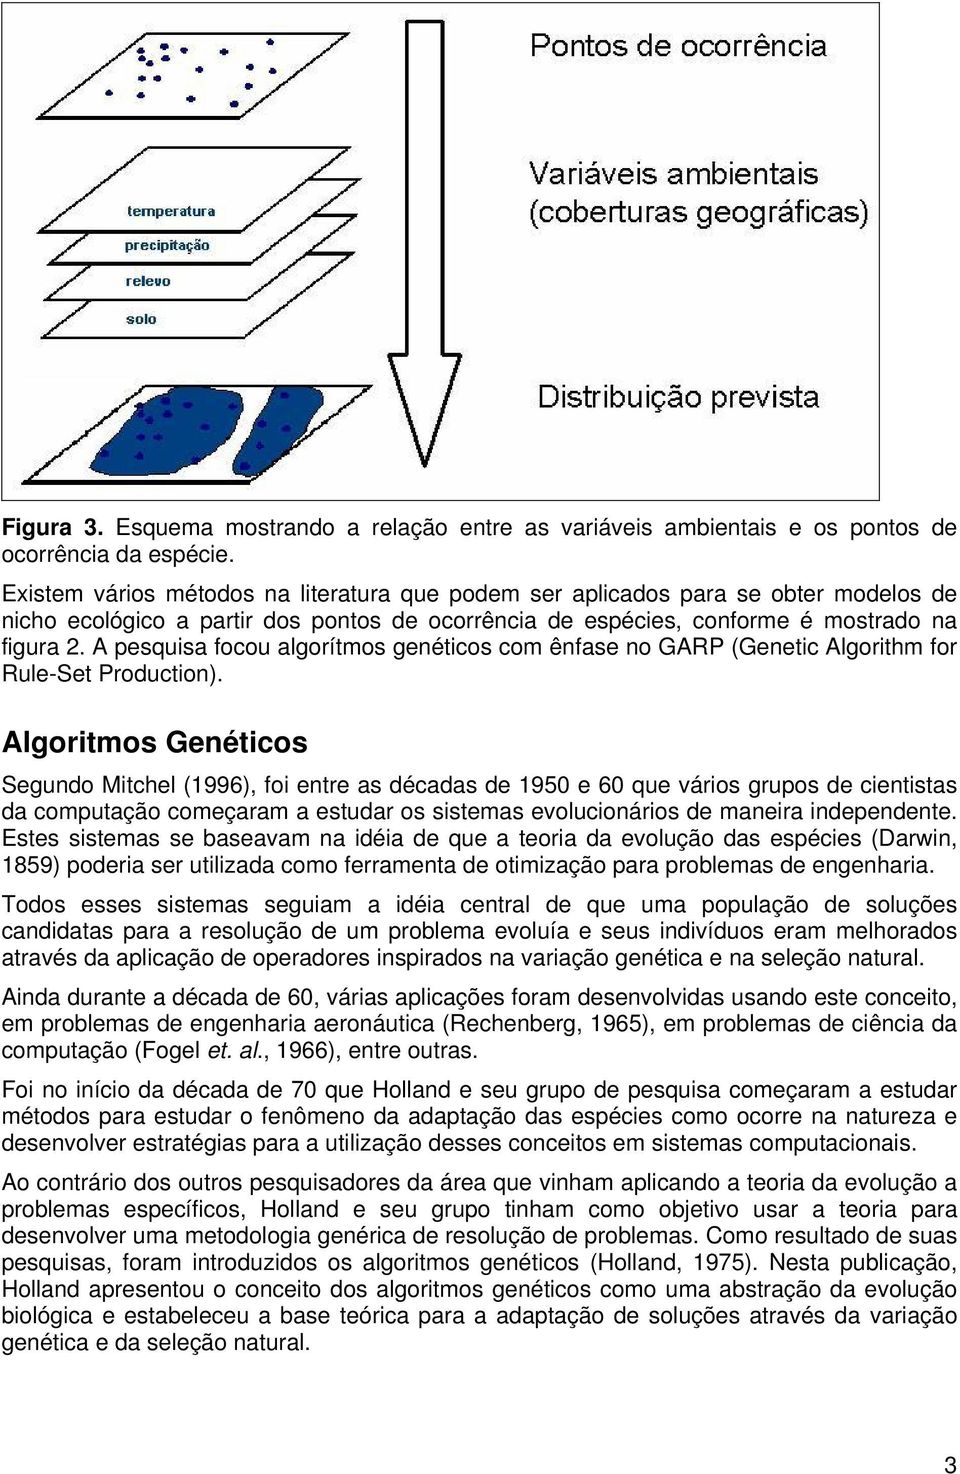 A pesquisa focou algorítmos genéticos com ênfase no GARP (Genetic Algorithm for Rule-Set Production).